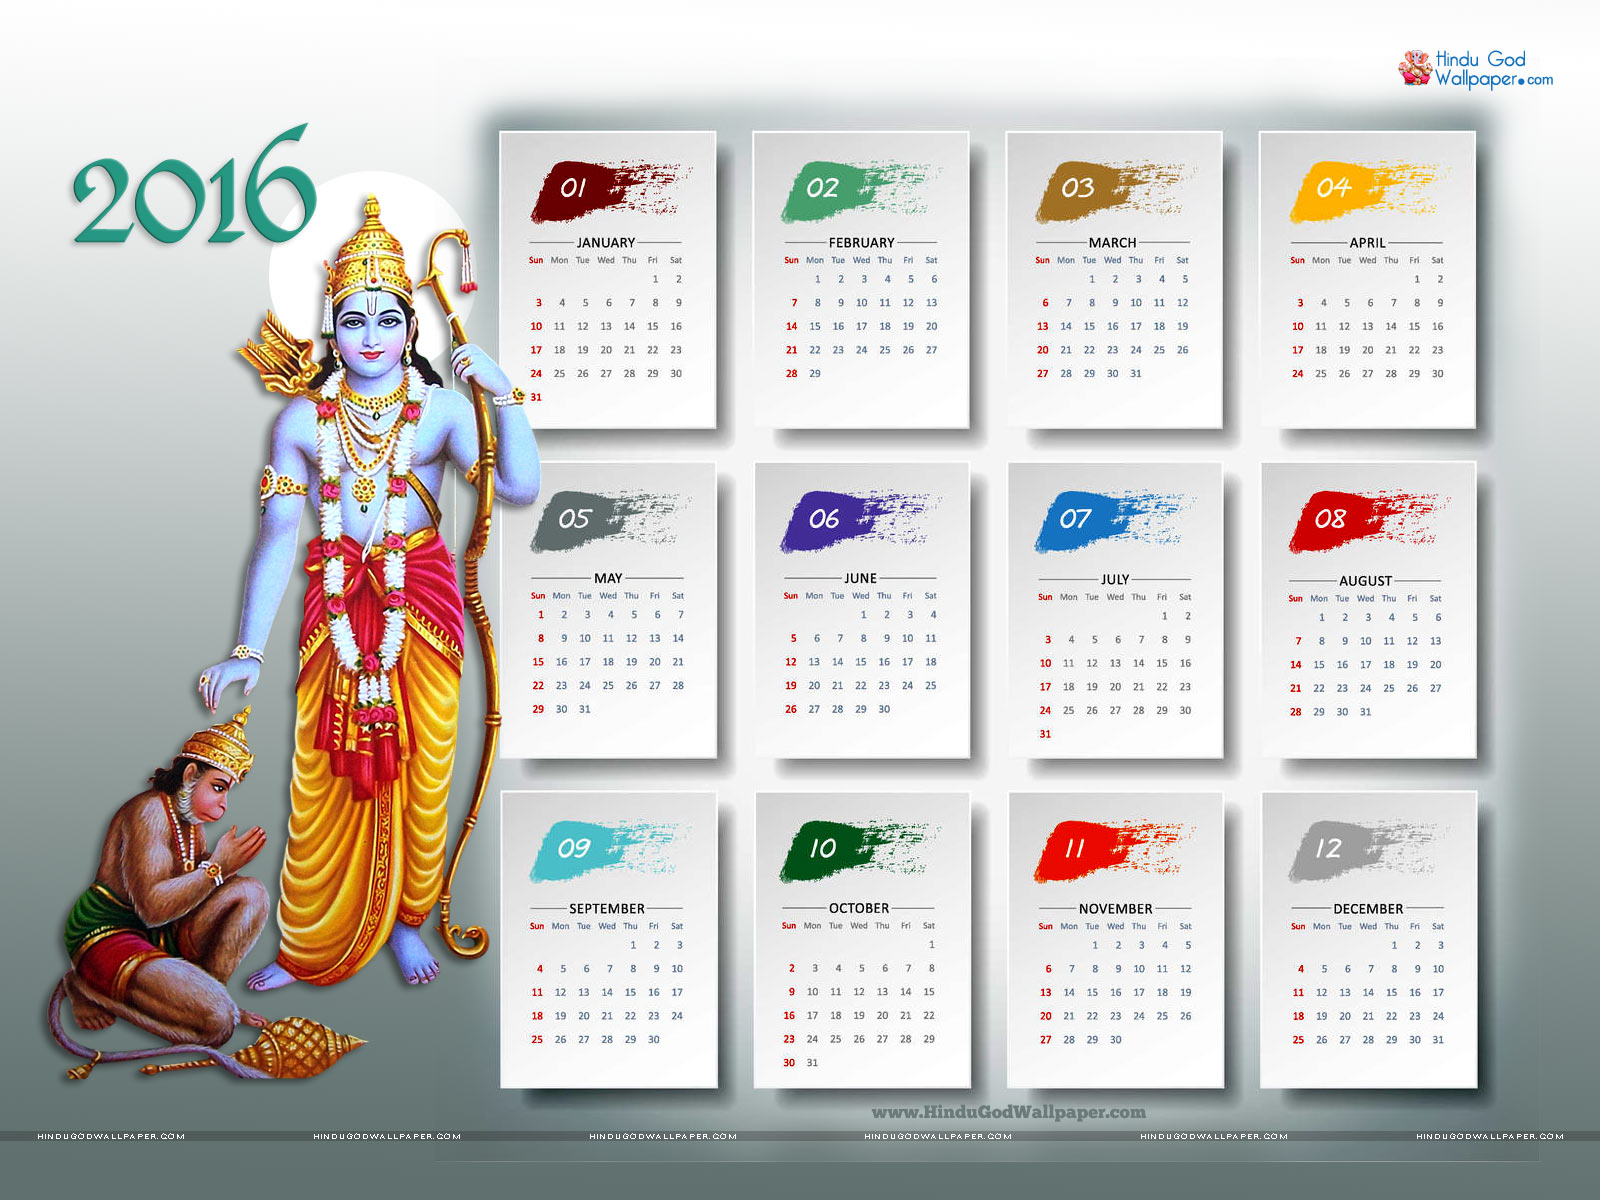 Interactive Calendar Wallpaper For Desktop